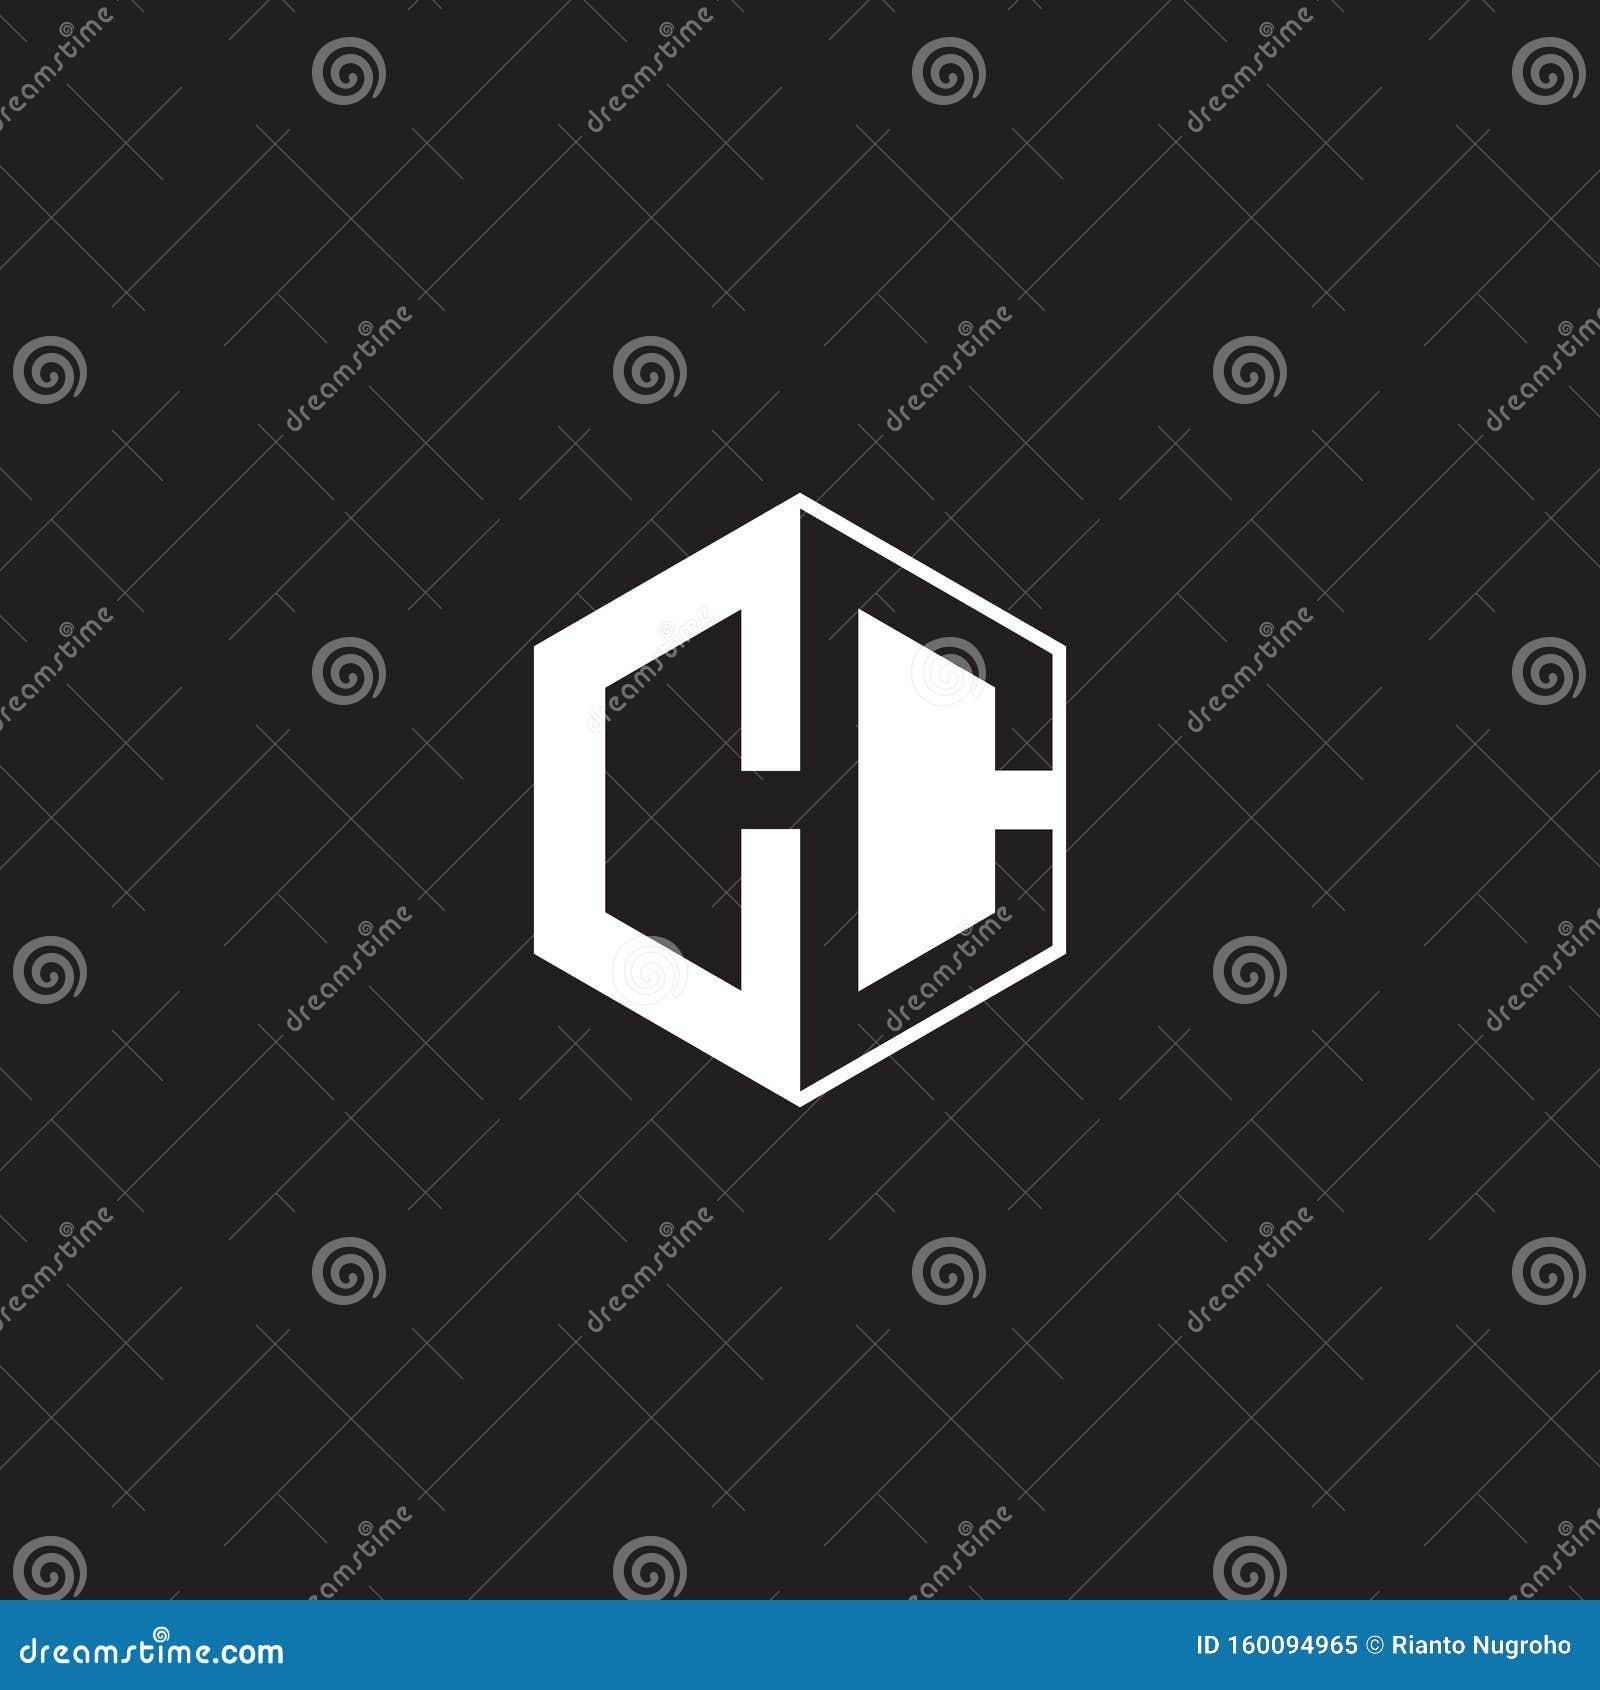 CC Logo Monogram Hexagon with Black Background Negative Space Stock ...